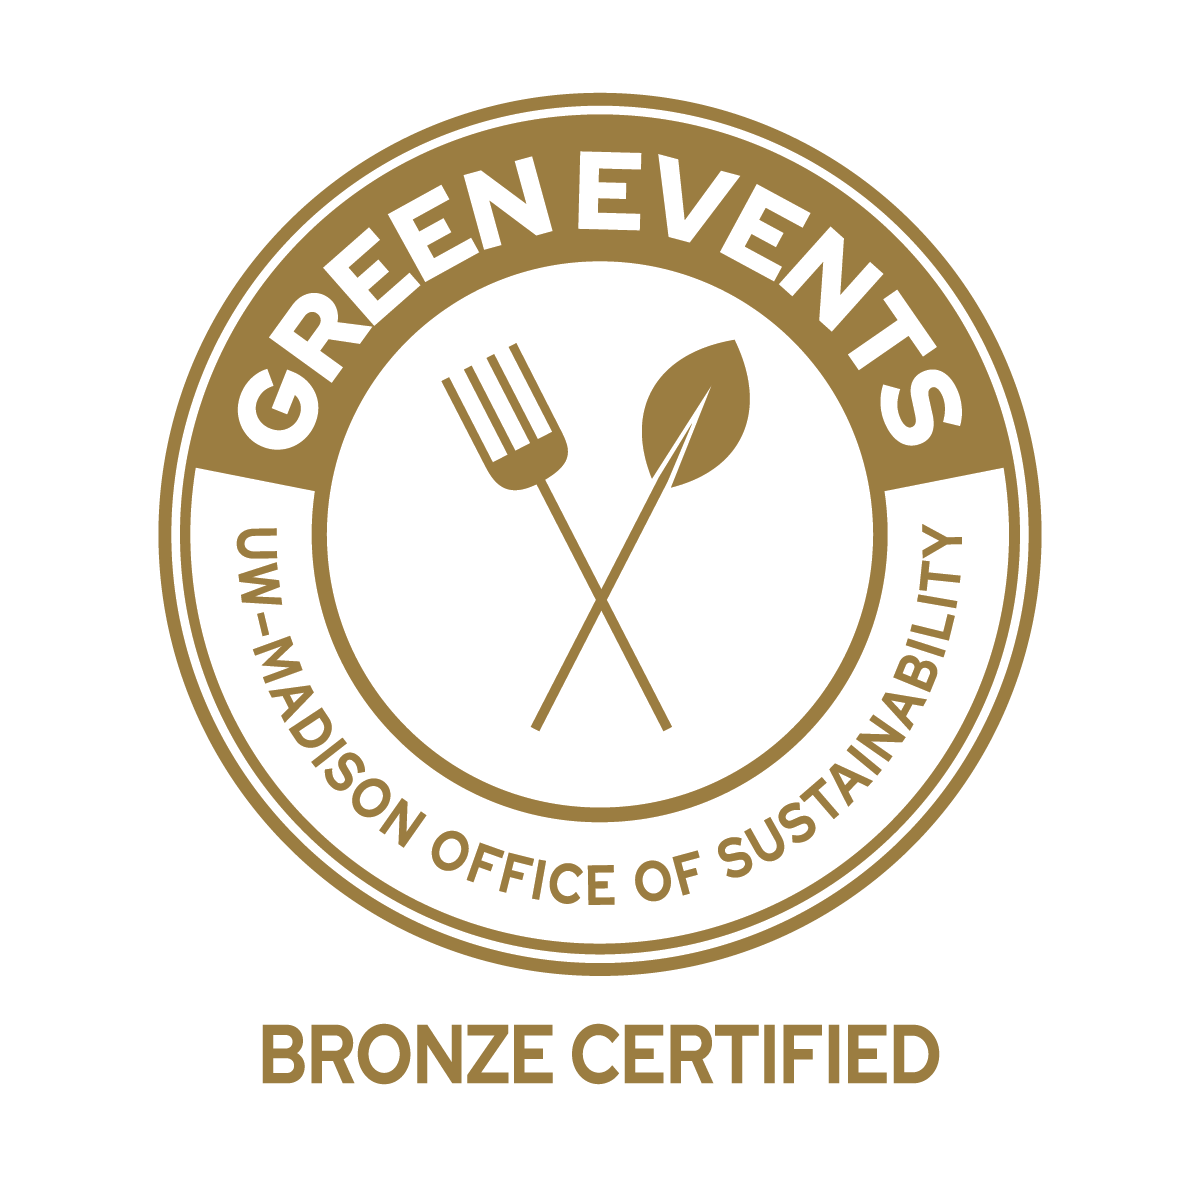 Green events team bronze seal